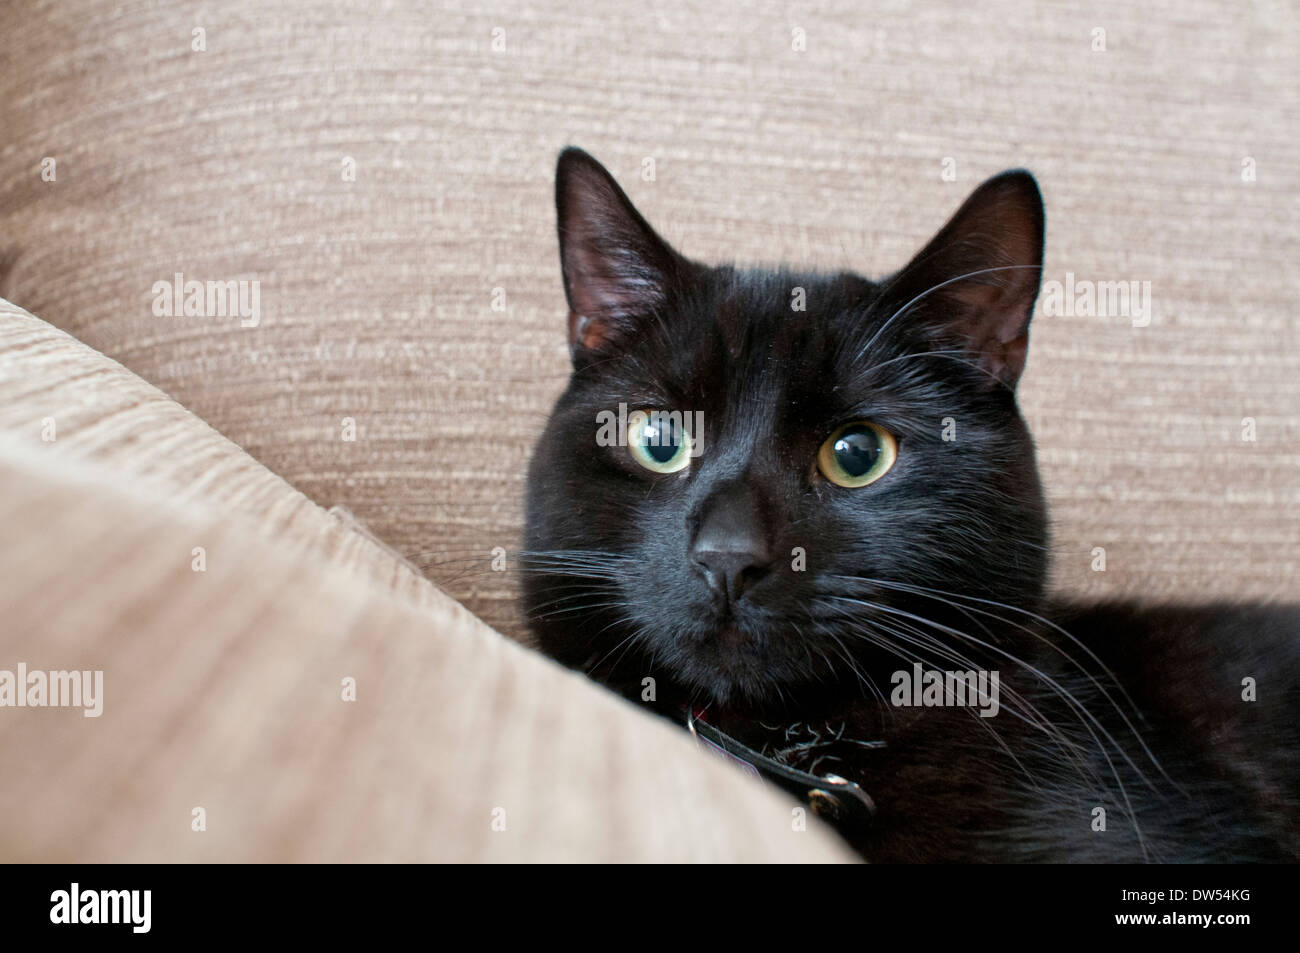 Black domestic British short-haired cat Stock Photo